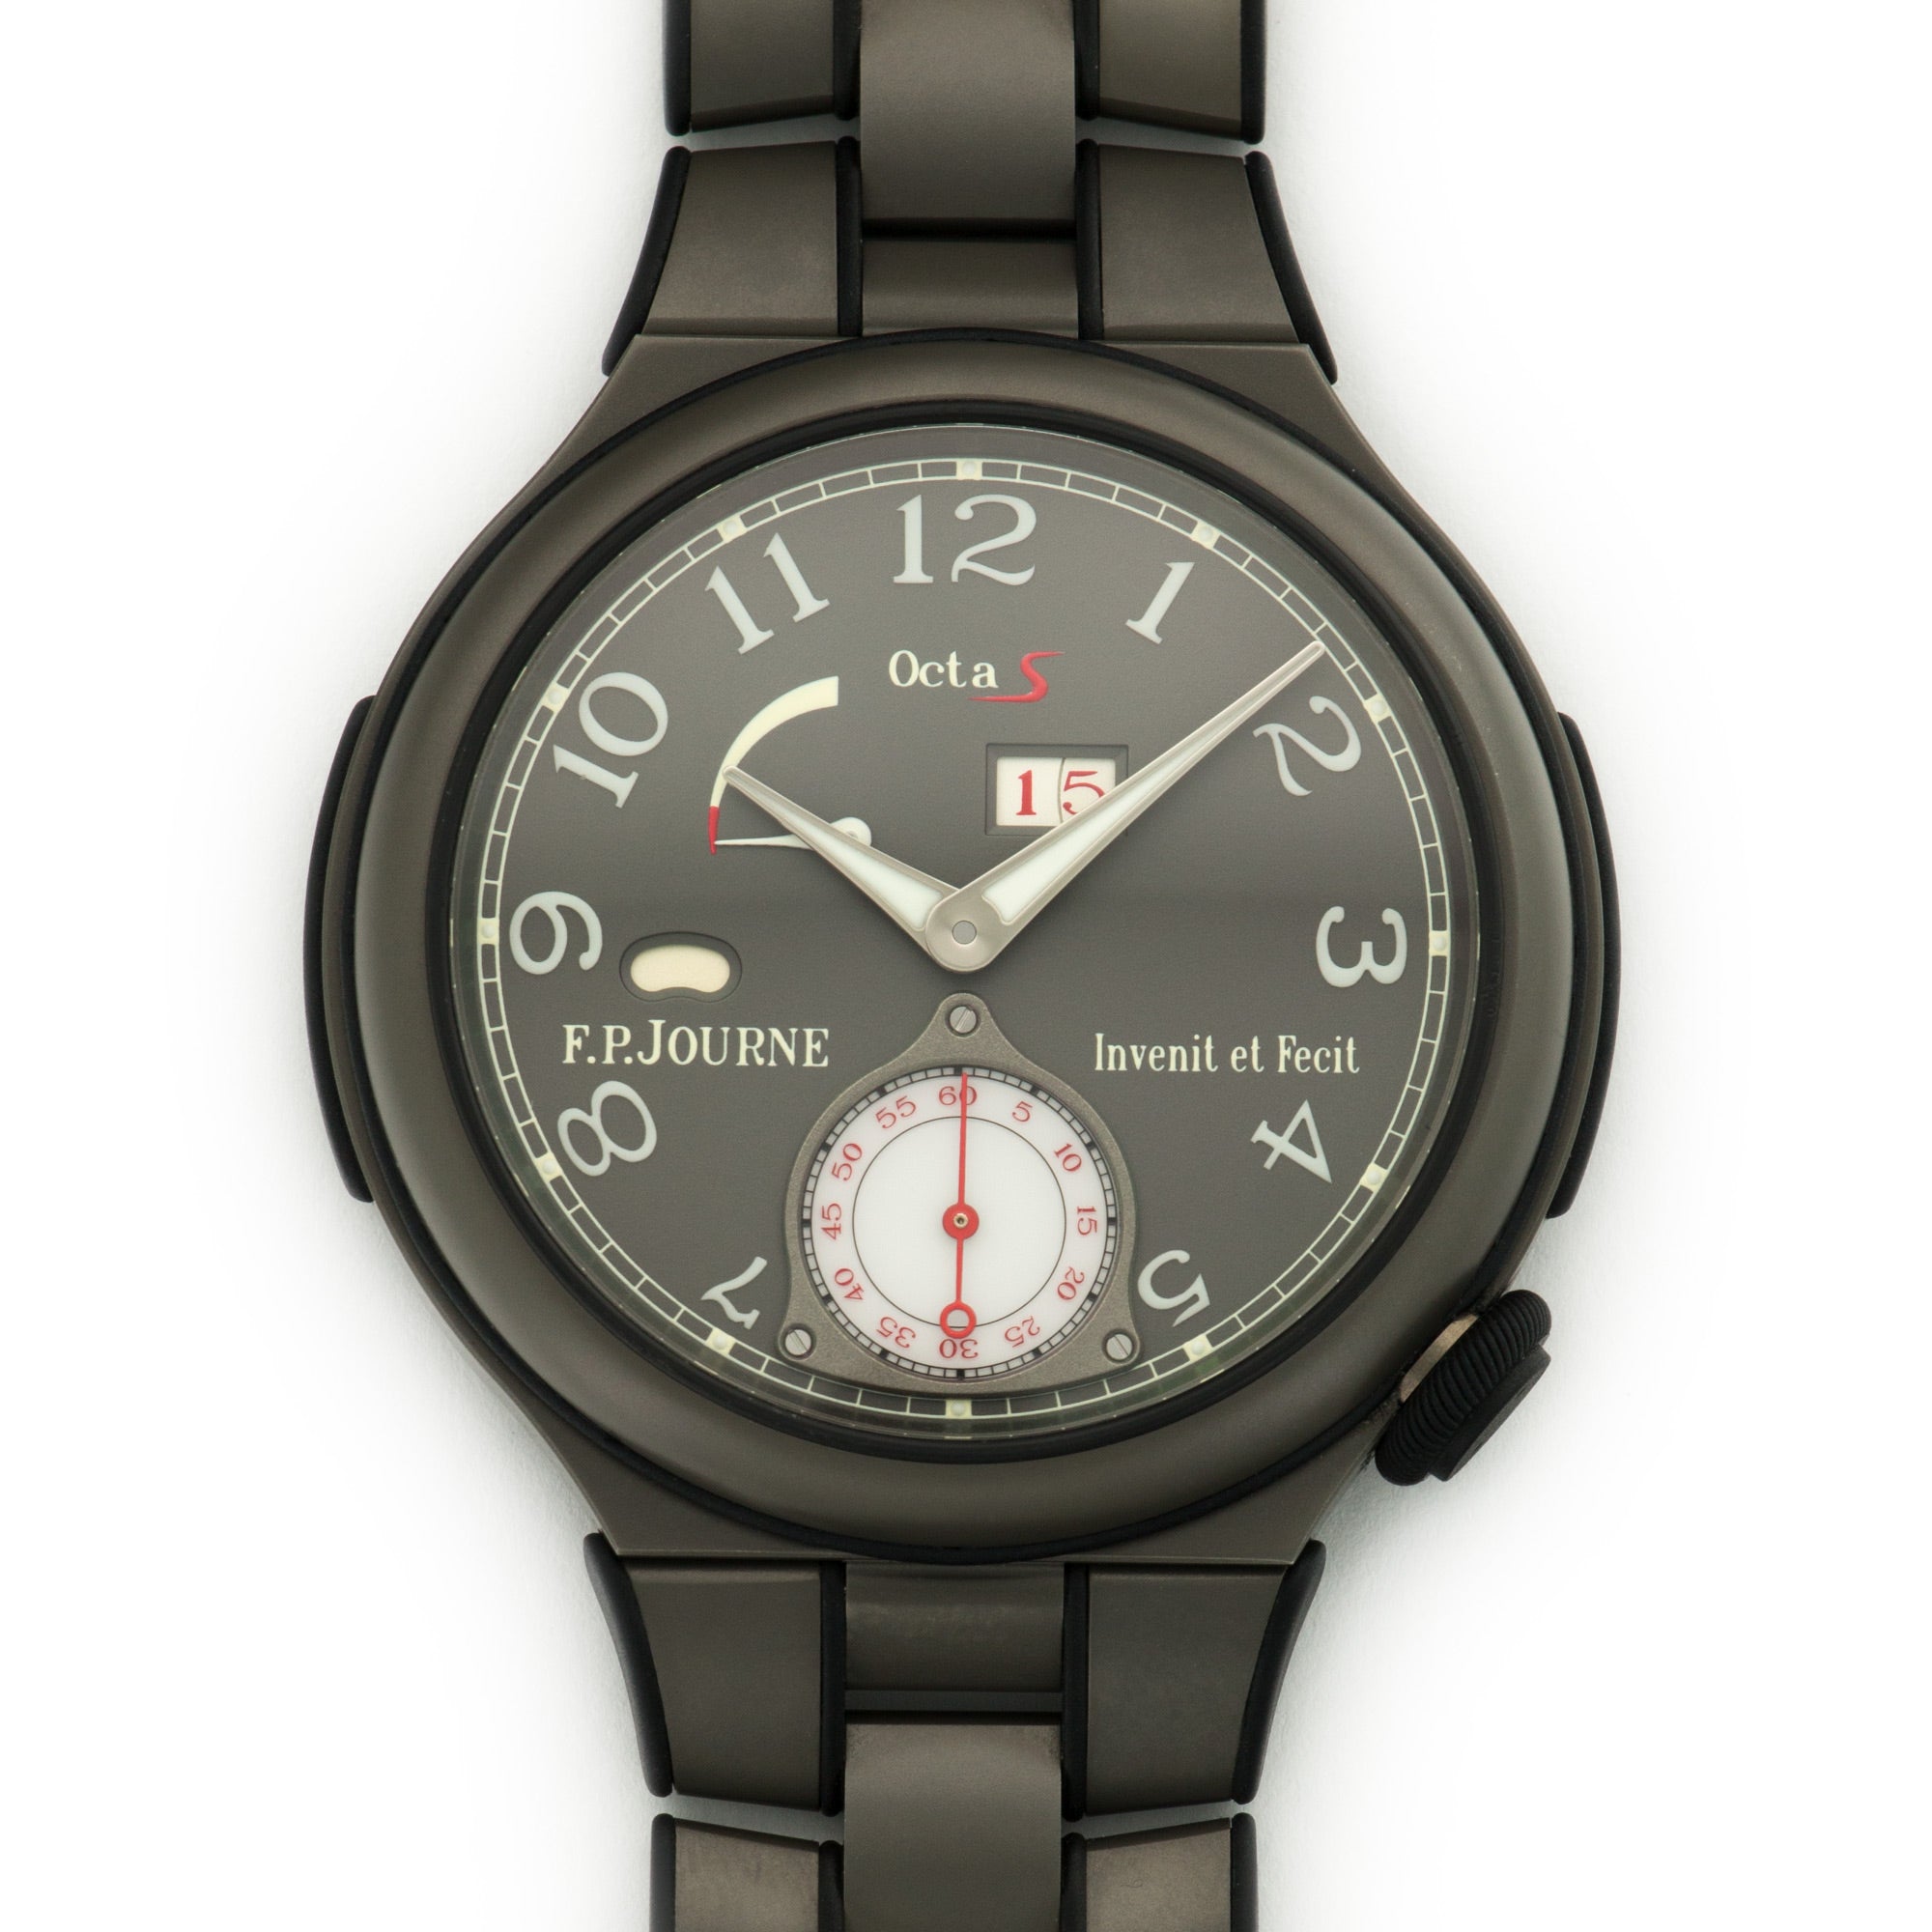 FP Journe - F.P. Journe Titanium Octa S Sport Watch - The Keystone Watches